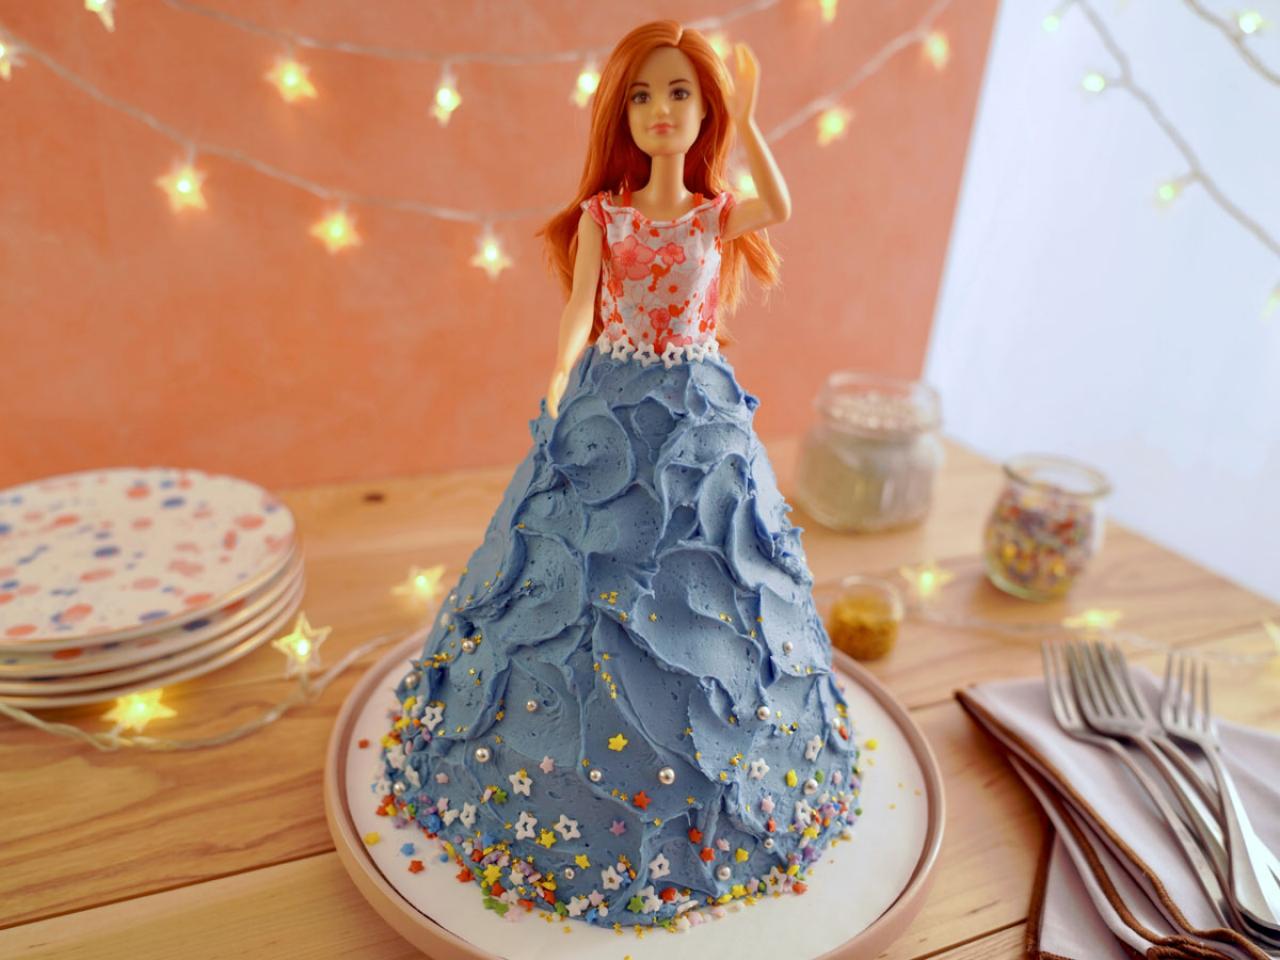 Edible Barbie Princess Gumpaste Fondant Cake Topper Cake Zuckerbild | eBay